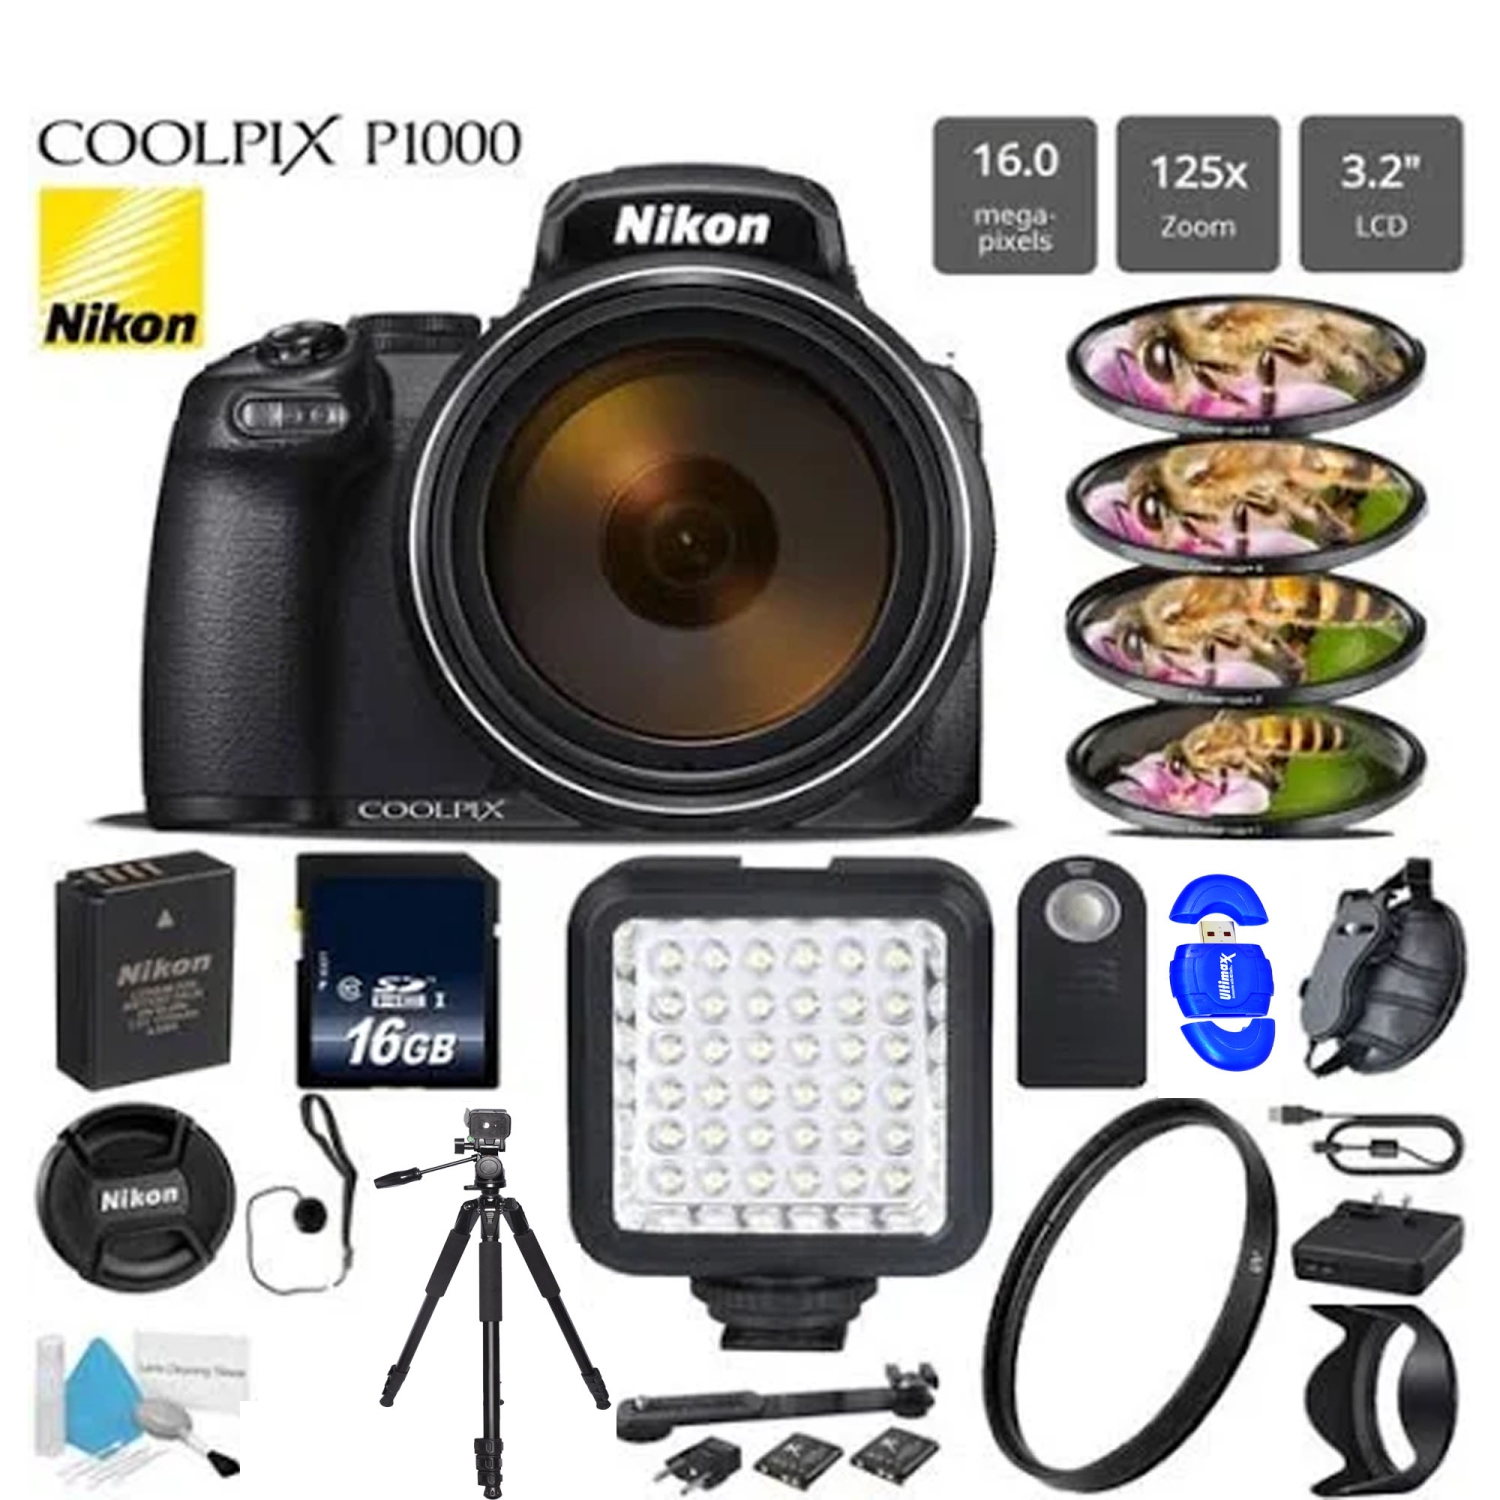 Nikon Coolpix P1000 16MP 125x Super-Zoom Digital Camera w/16GB| LED Light & More - US Version w/ Seller Warranty